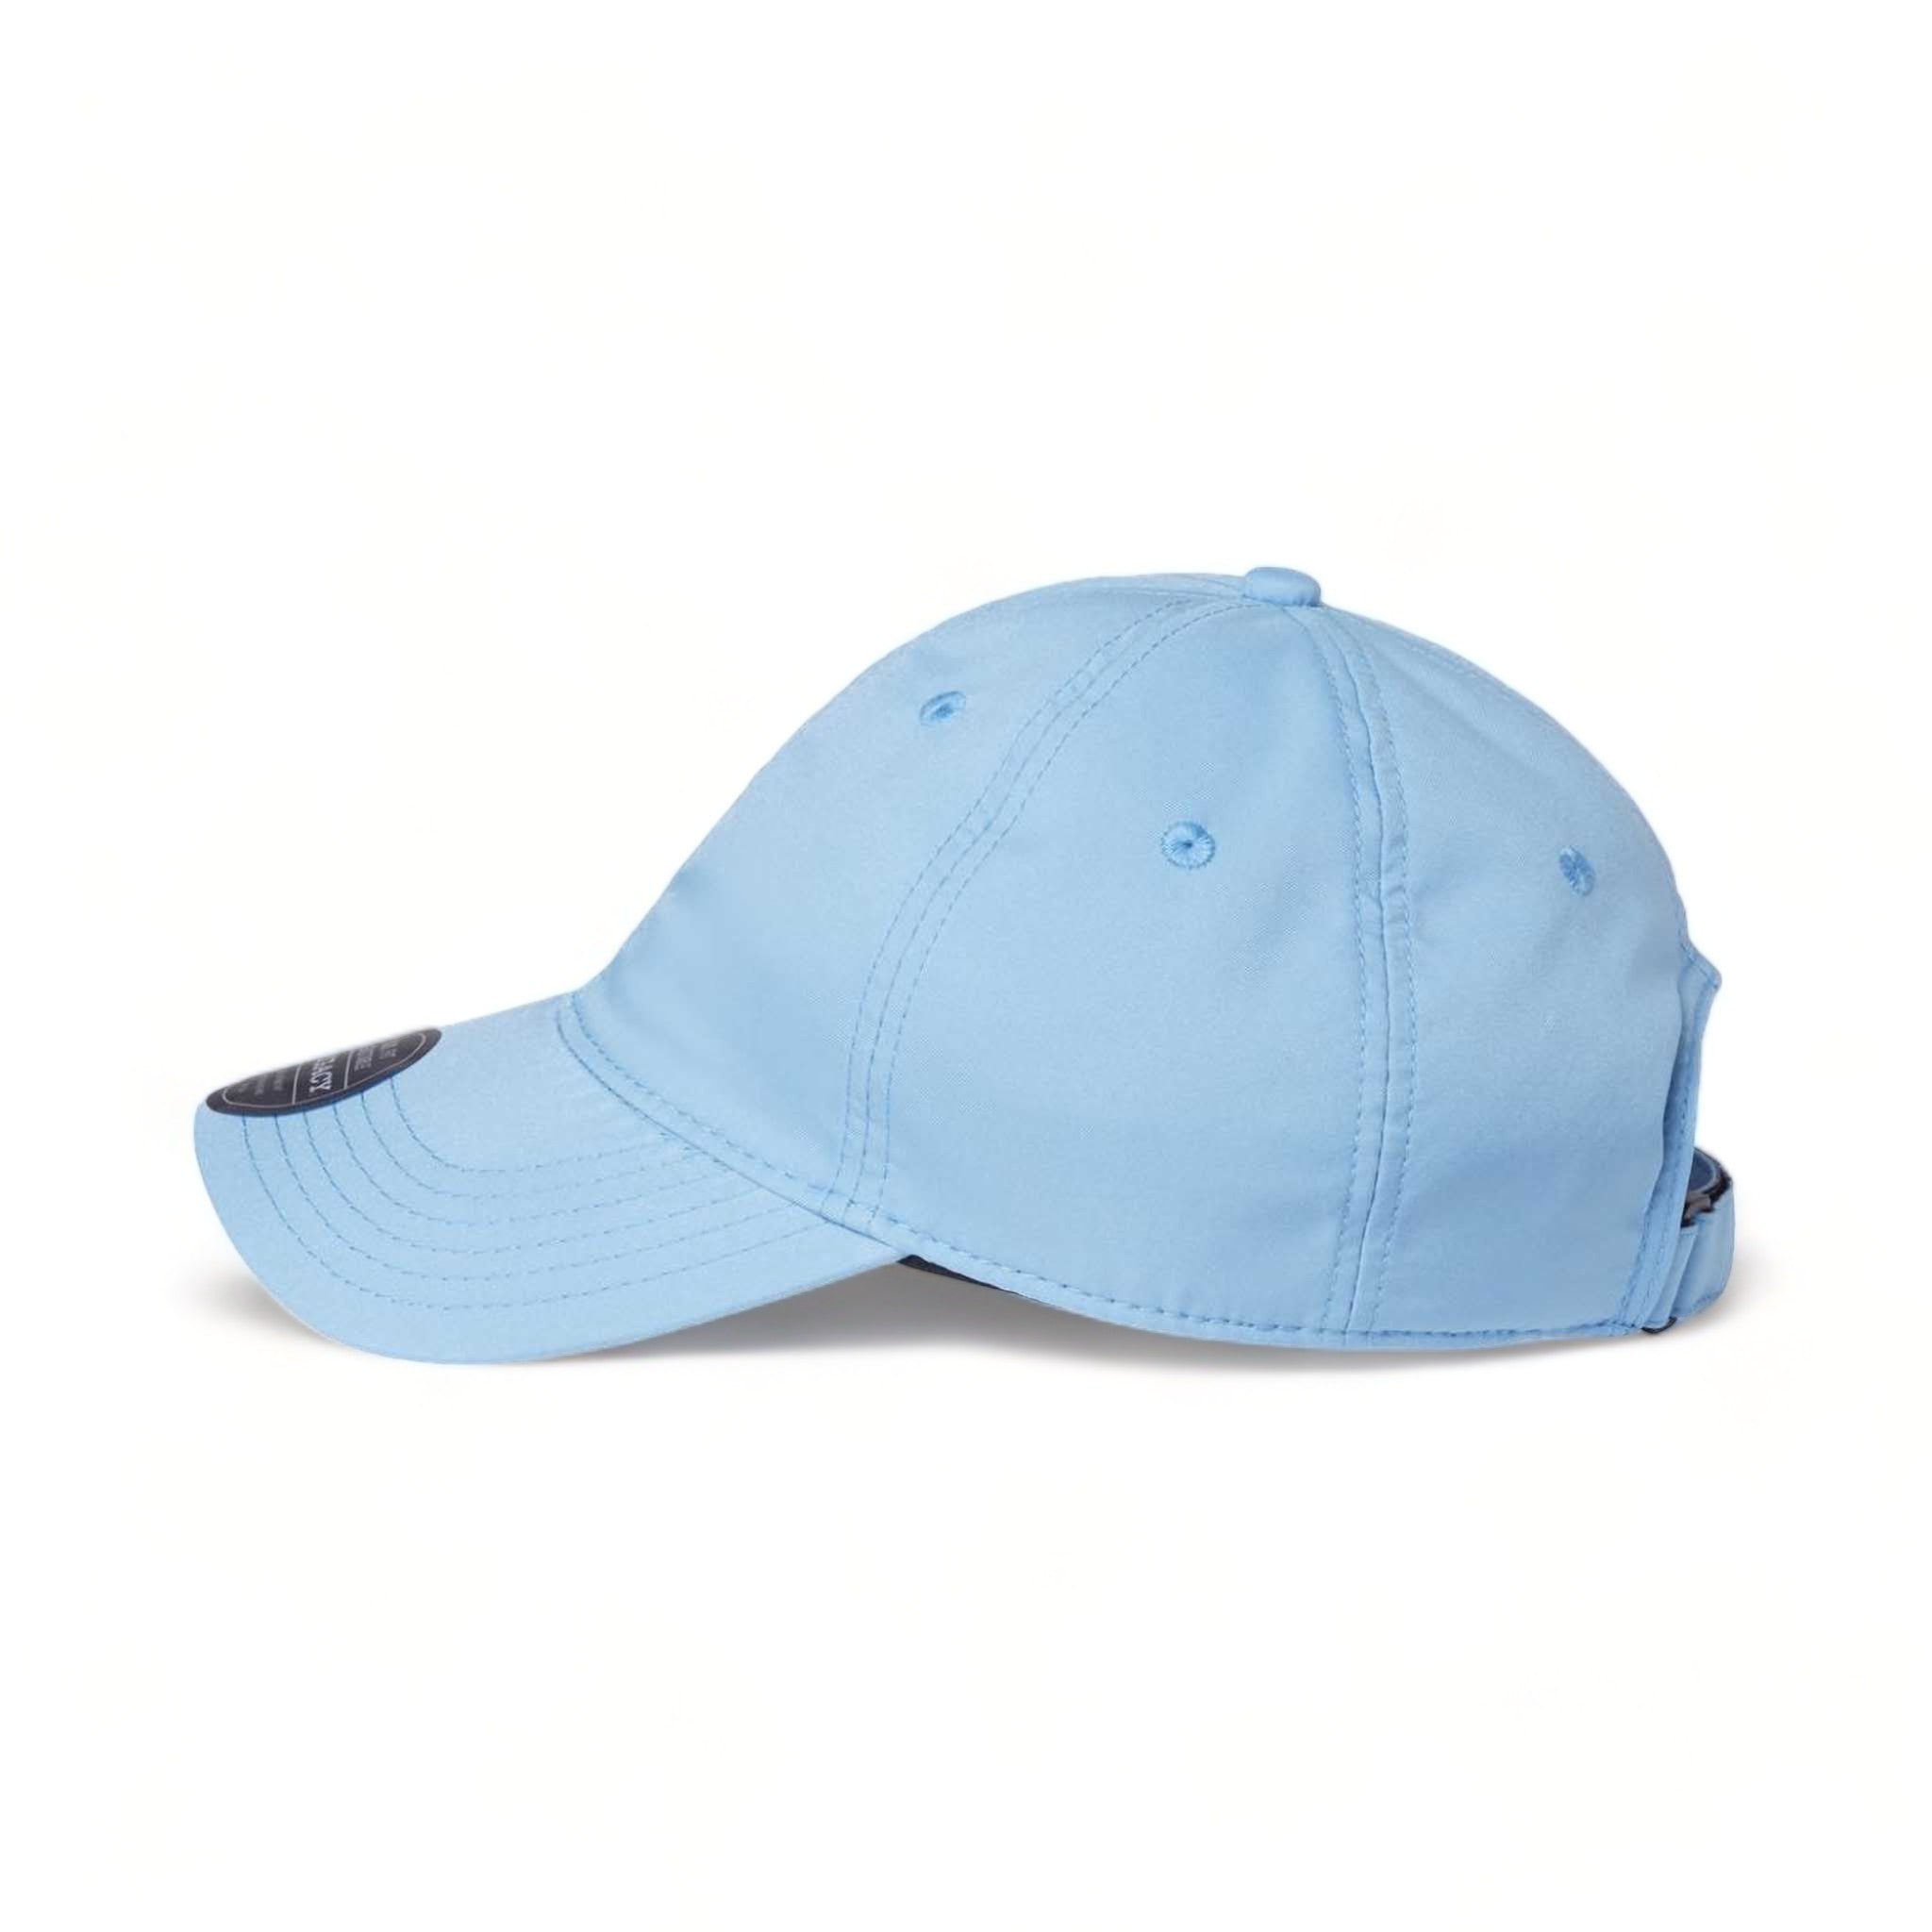 Side view of LEGACY CFA custom hat in light blue